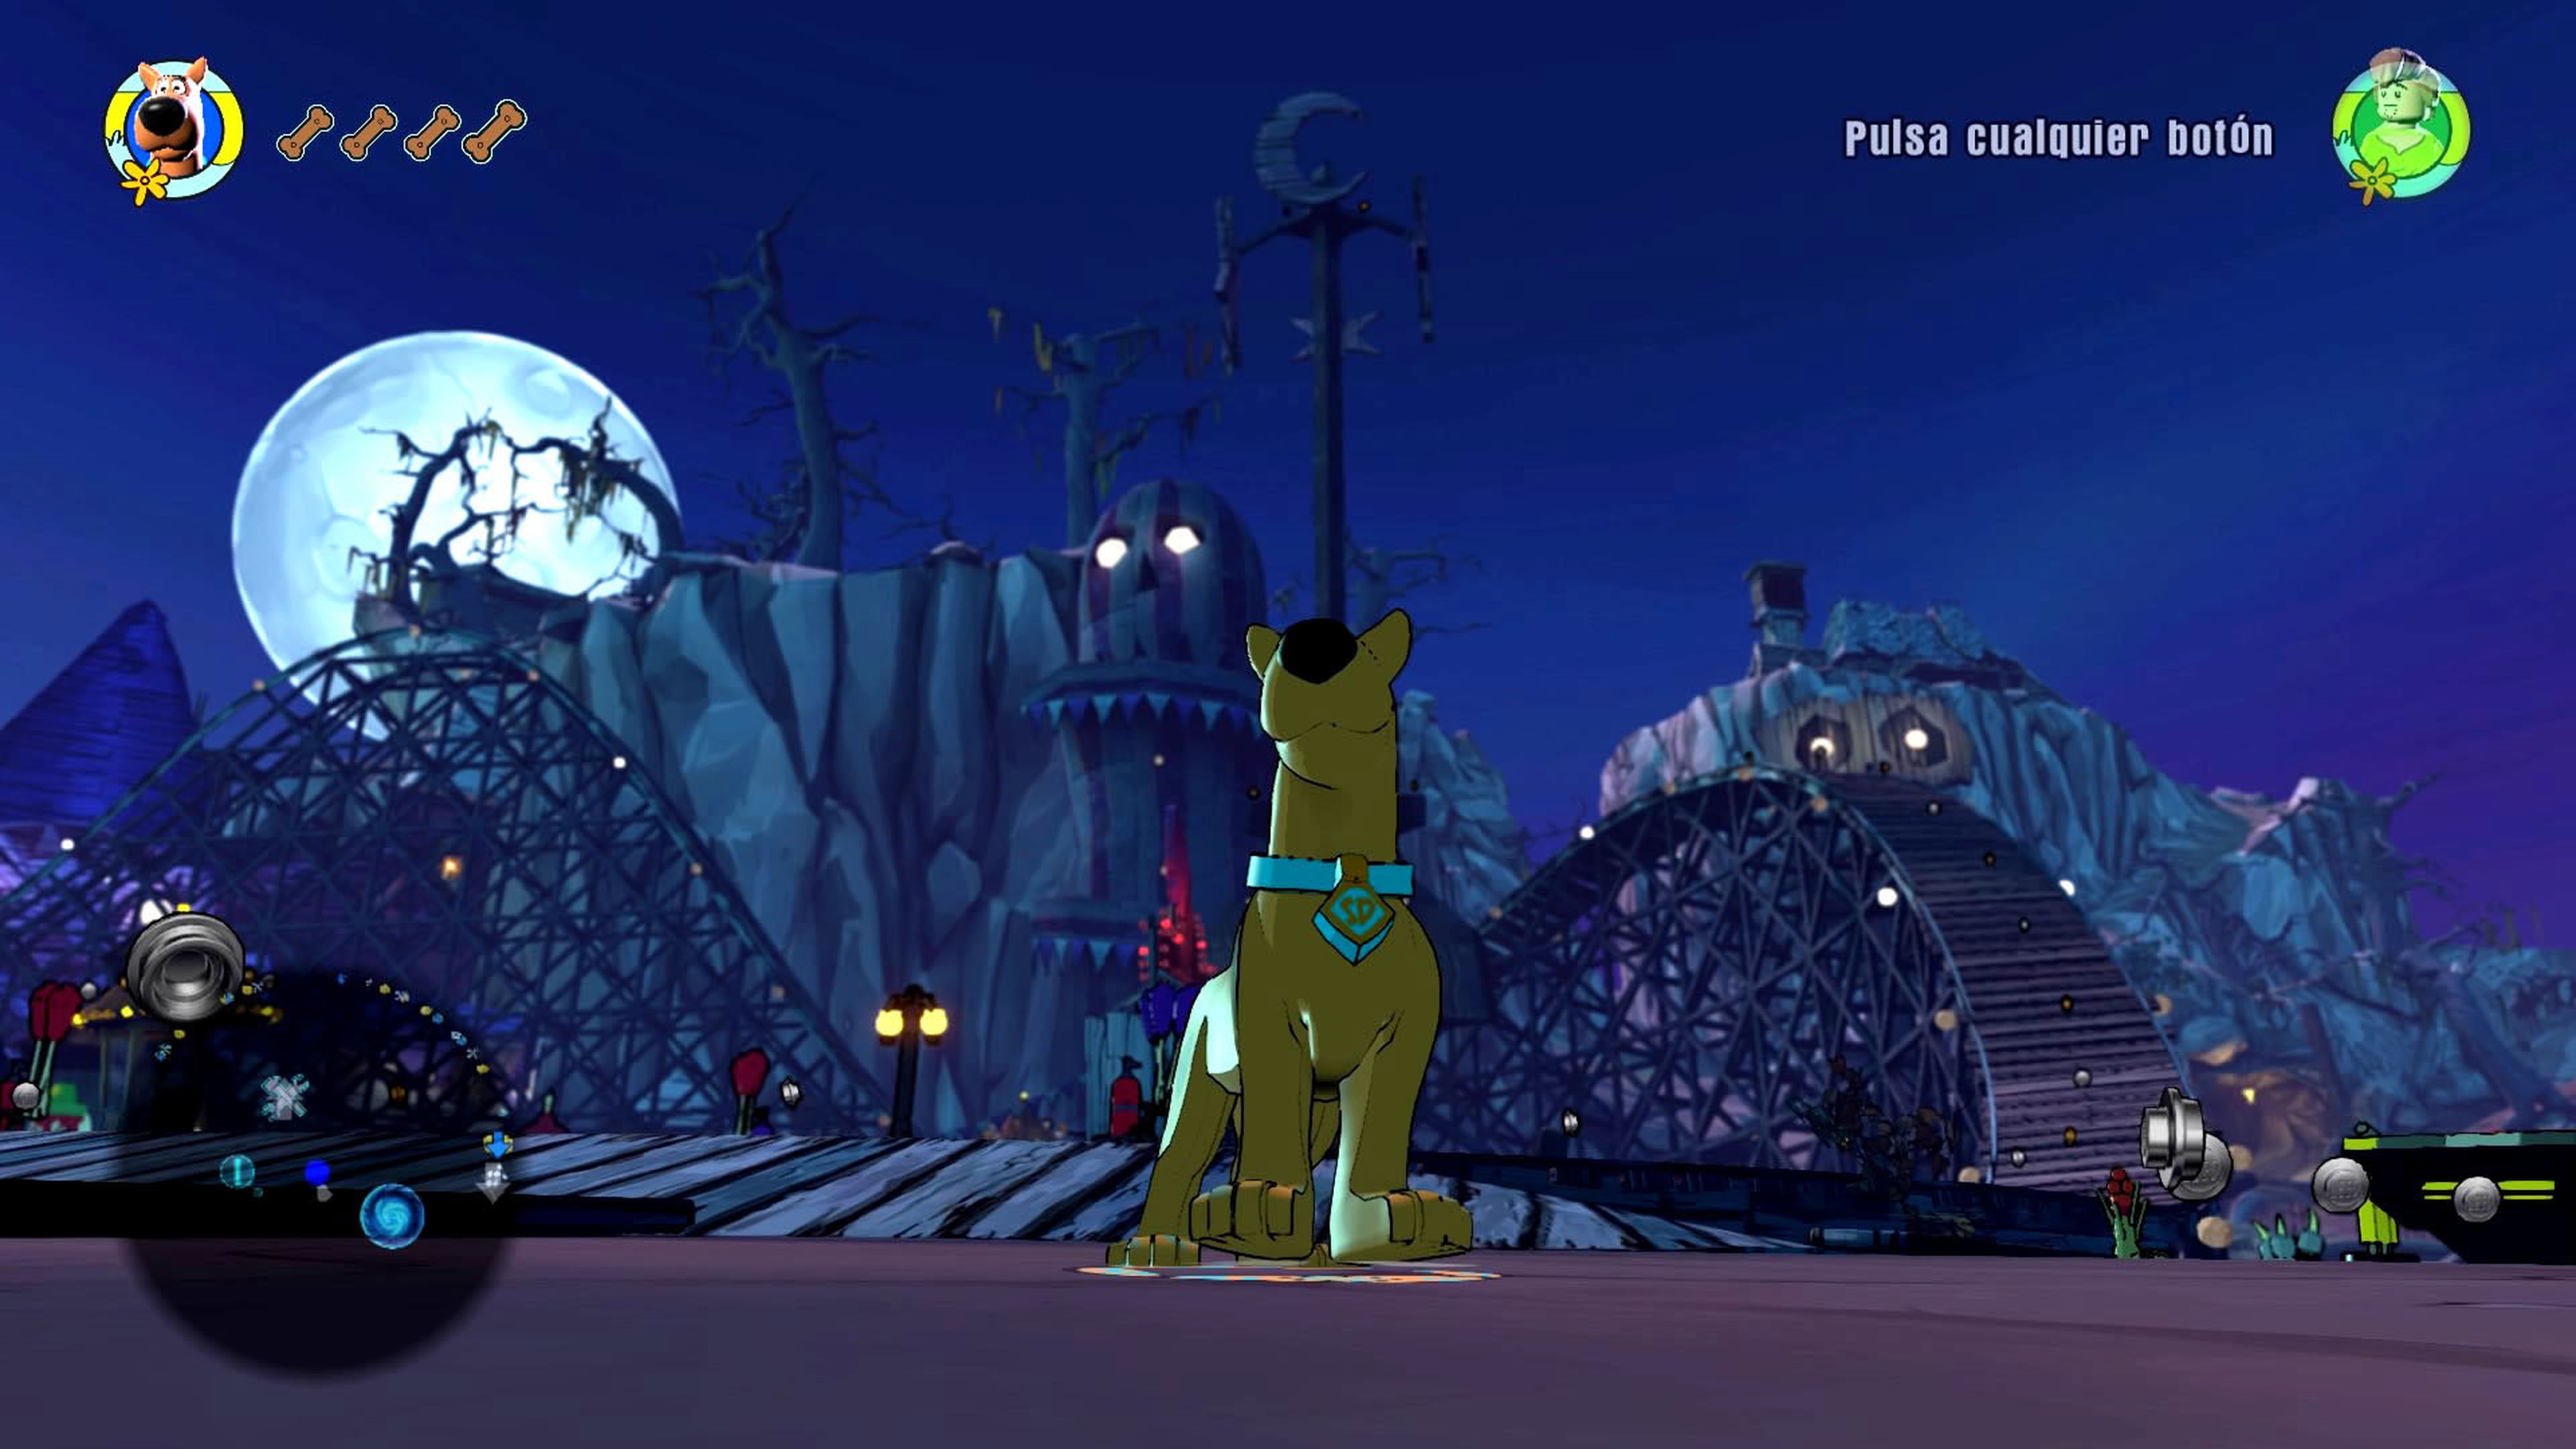 LEGO Dimensions Scooby Doo